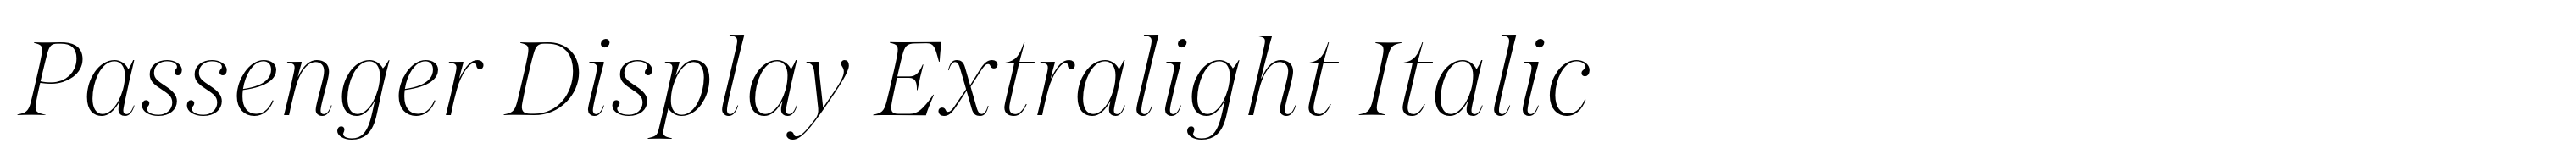 Passenger Display Extralight Italic